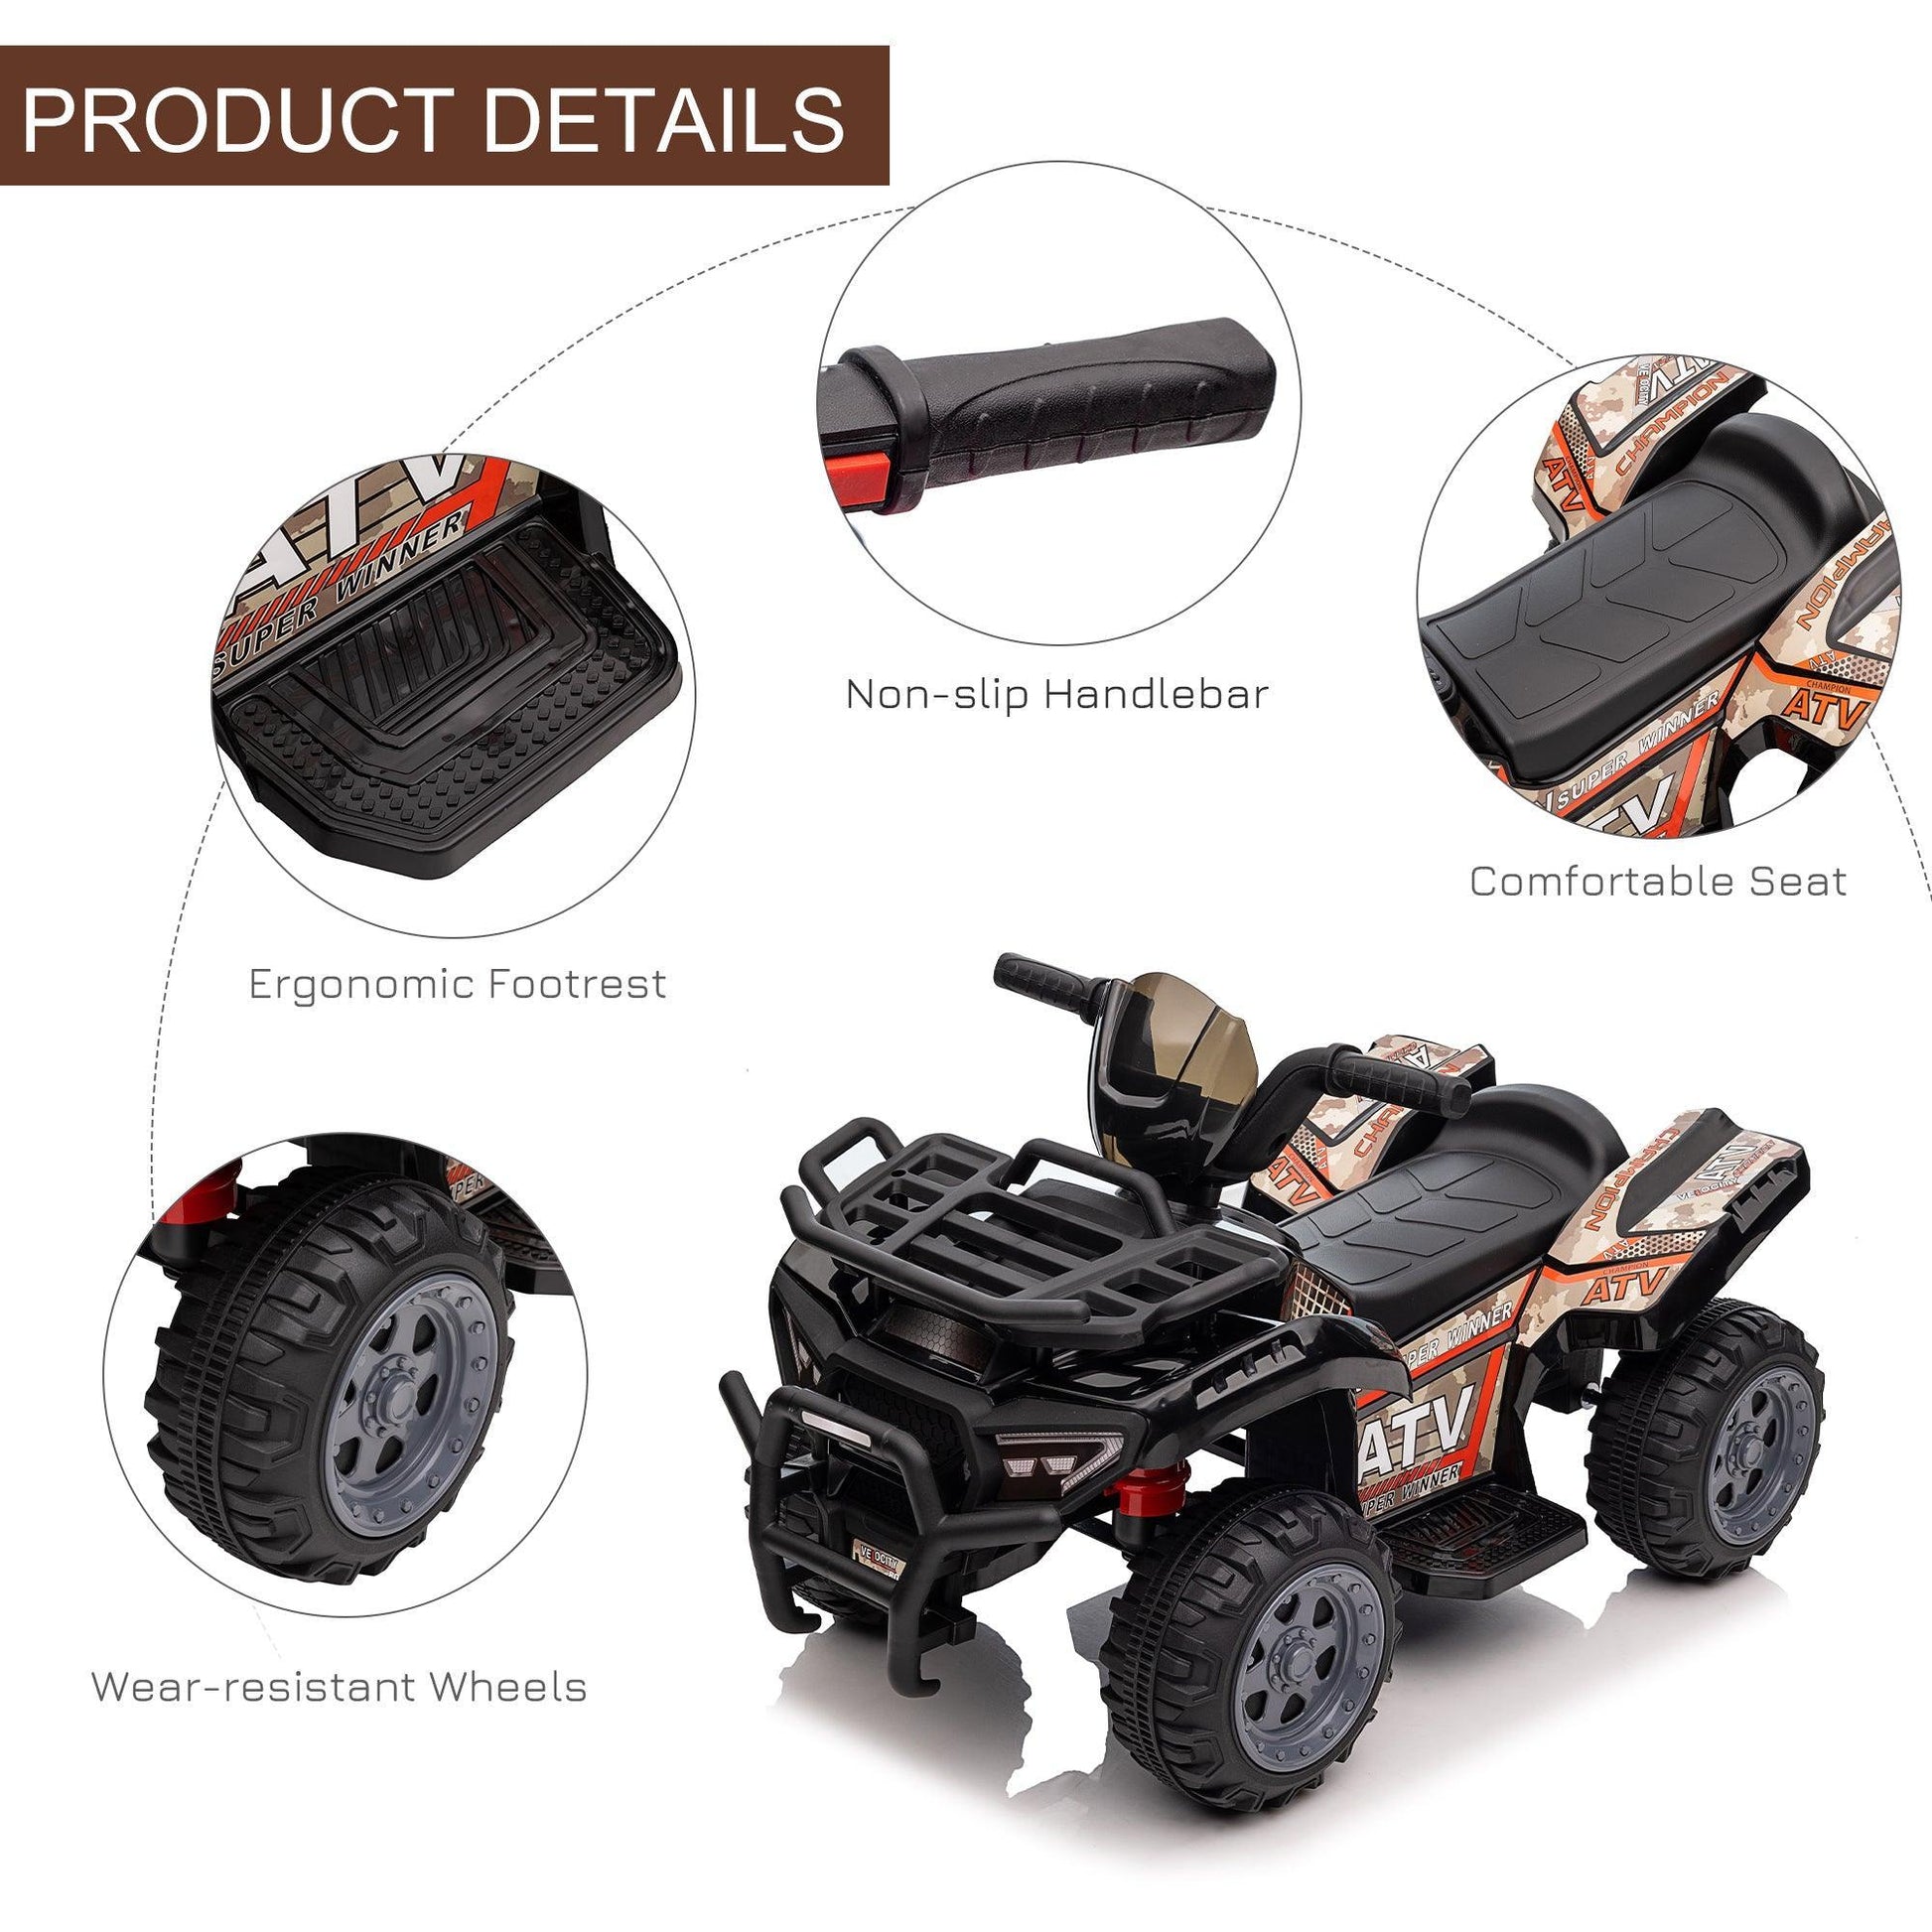 HOMCOM Kids ATV Car, 6V Battery Powered, 18-36 Months, Black - ALL4U RETAILER LTD